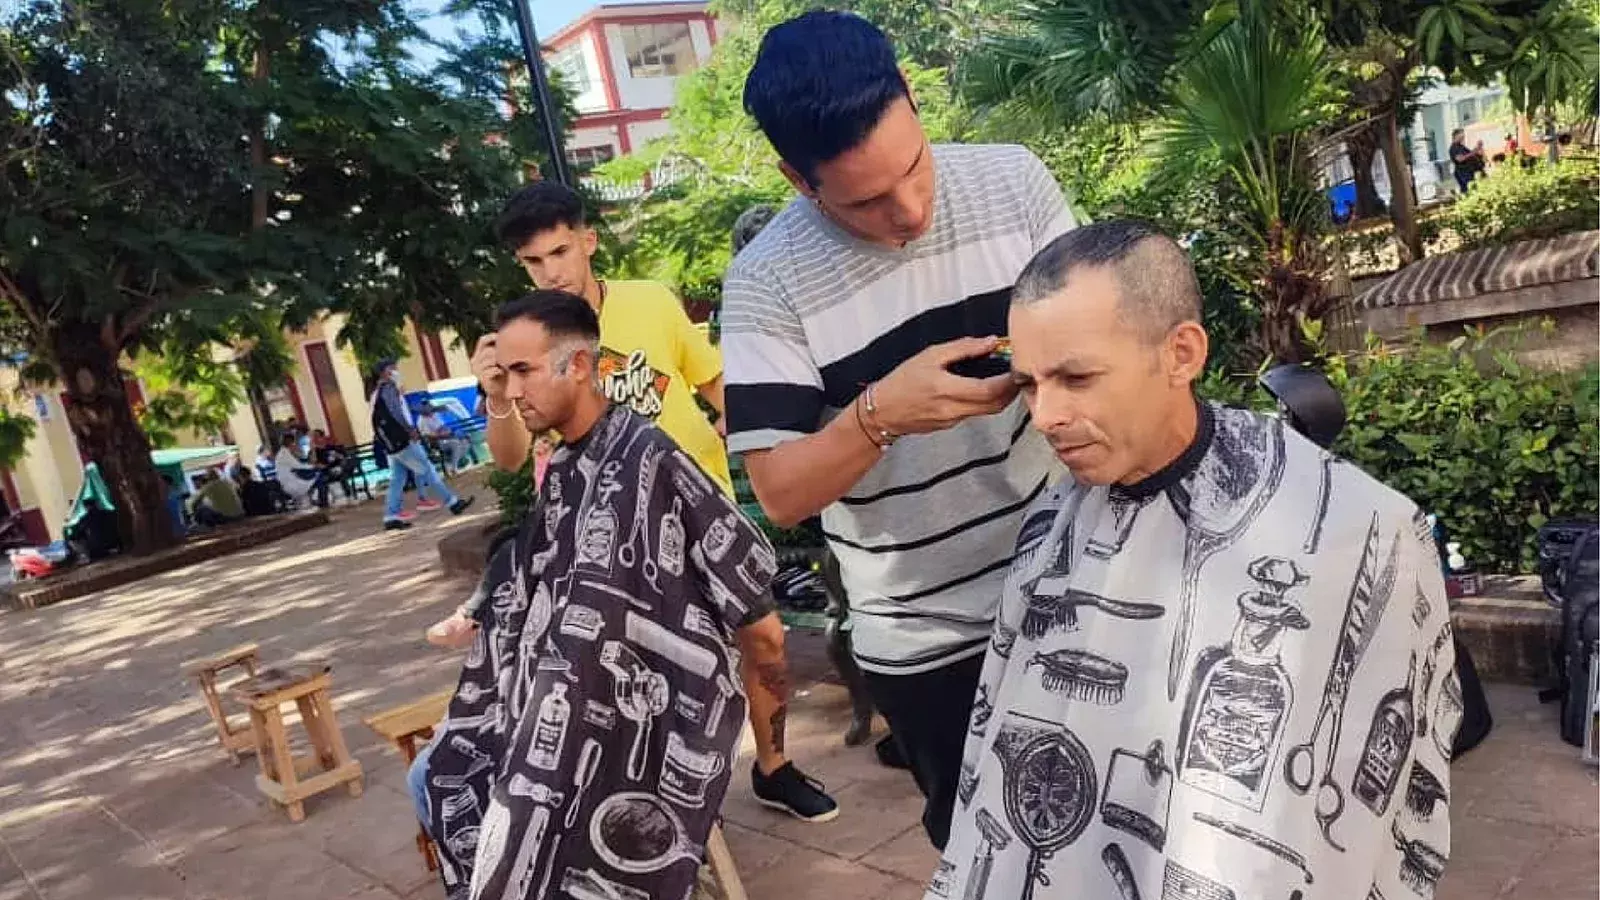 Barberos cubanos se unen para ayudar a niños con cáncer